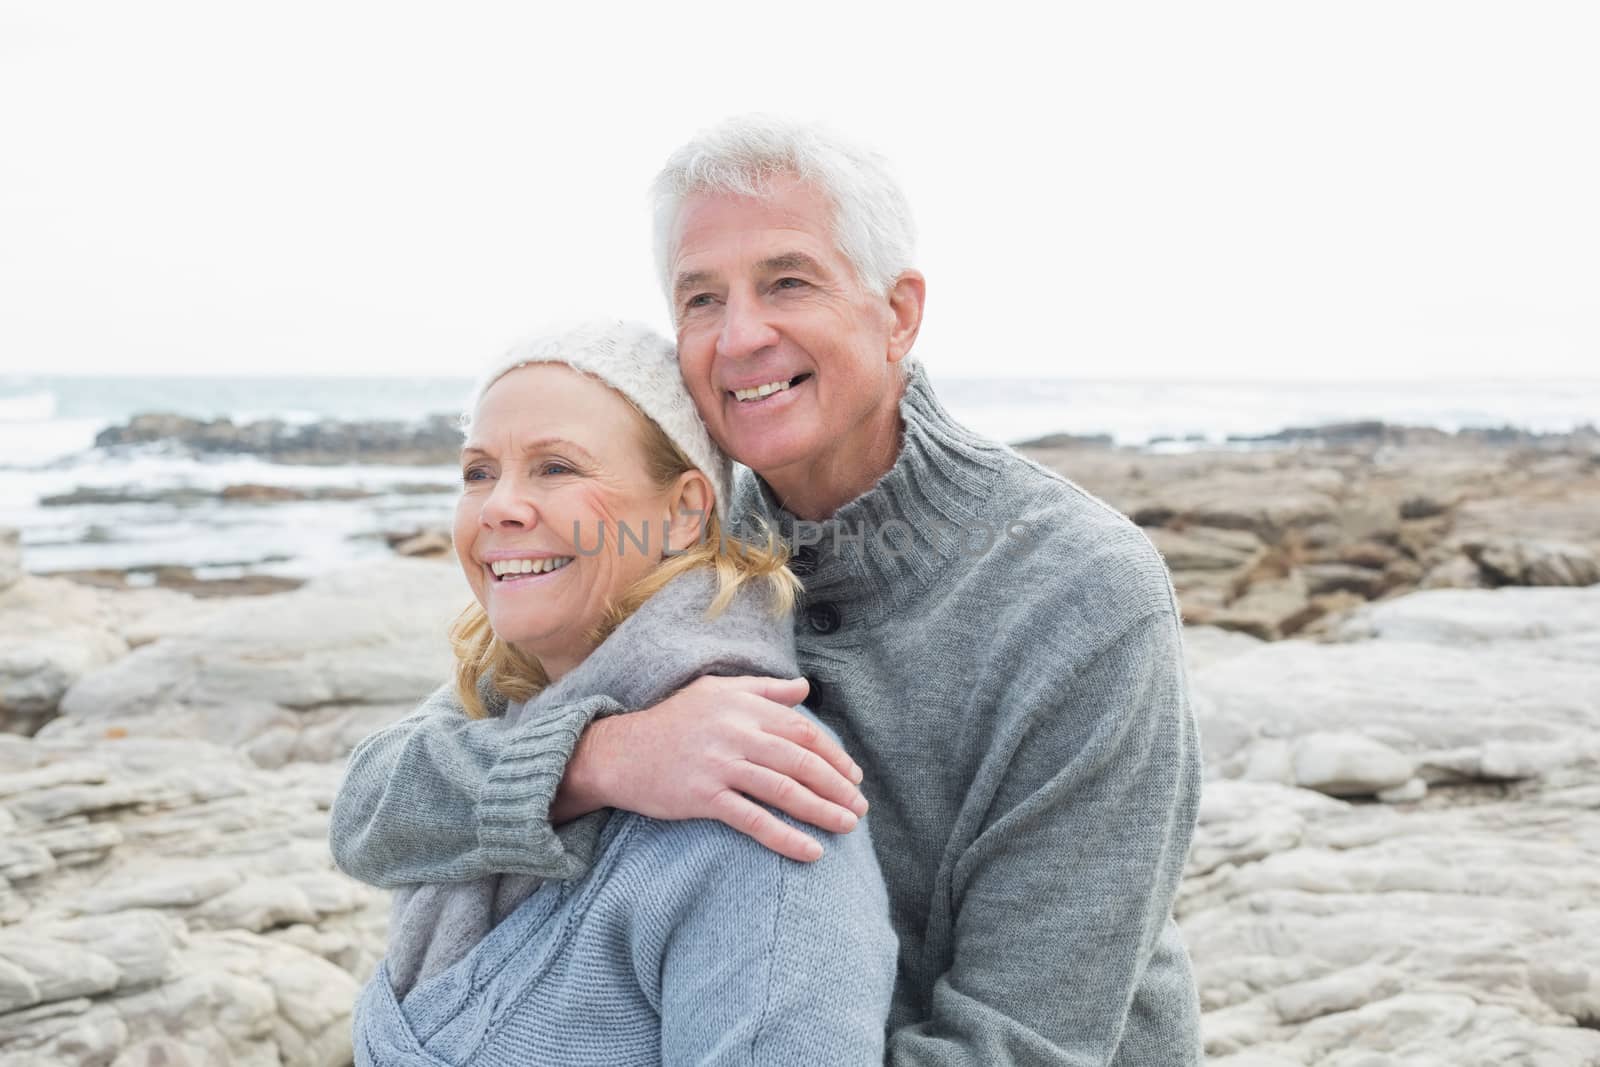 Romantic senior couple together on rocky beach by Wavebreakmedia